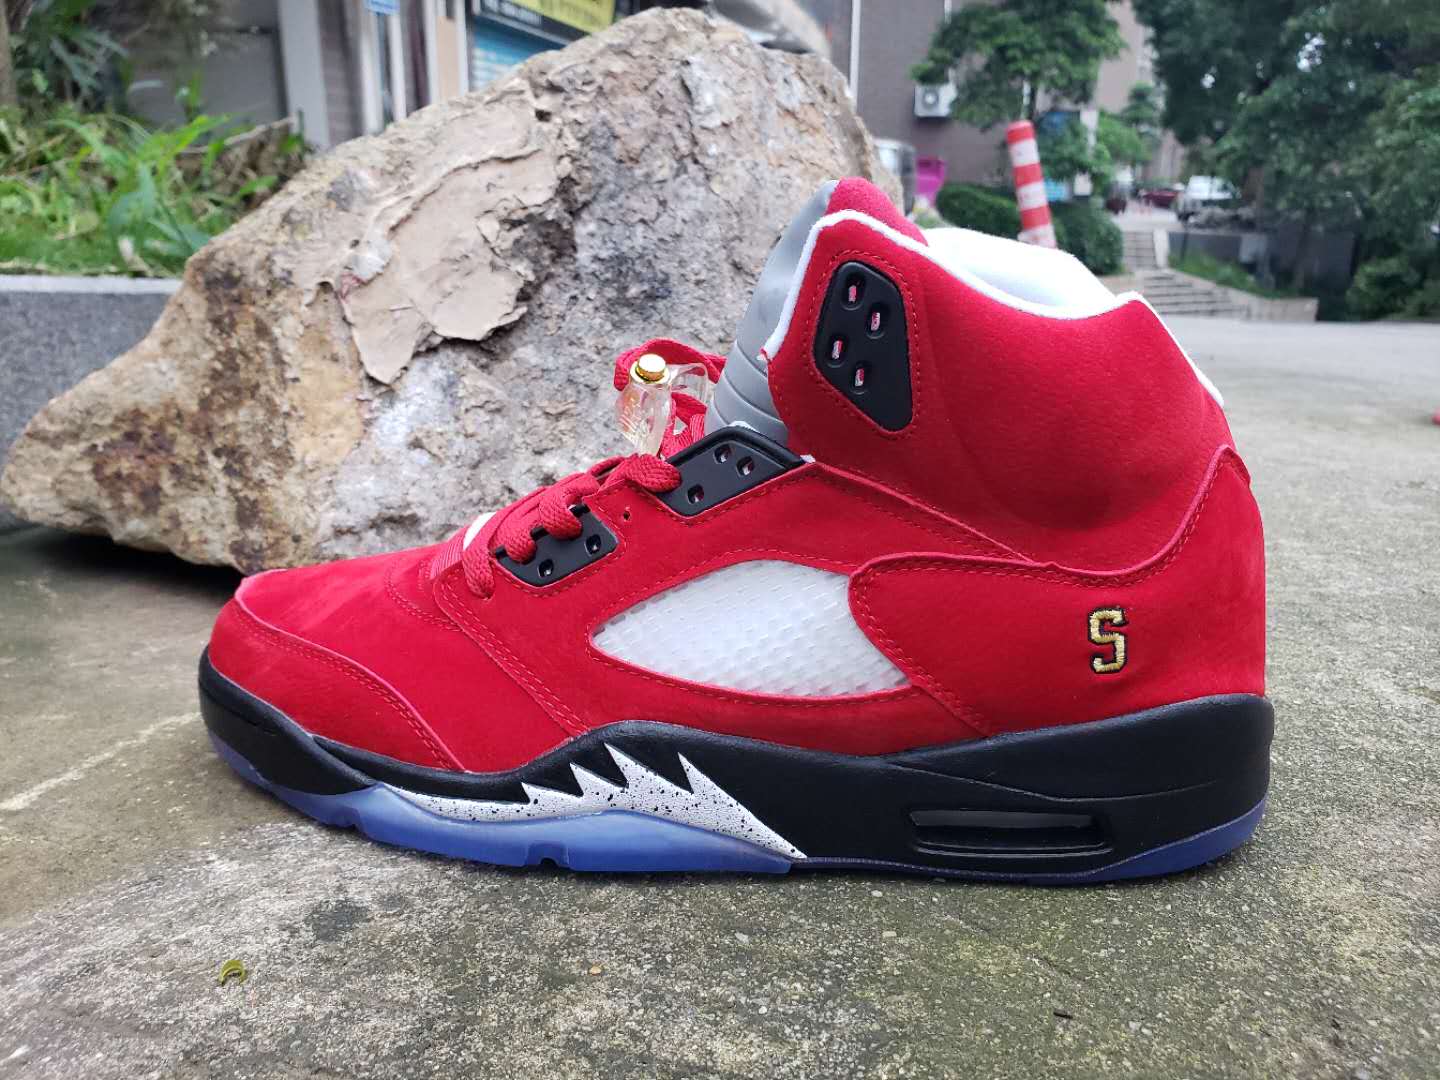 New Jordan 5 Retro Red Black Shoes